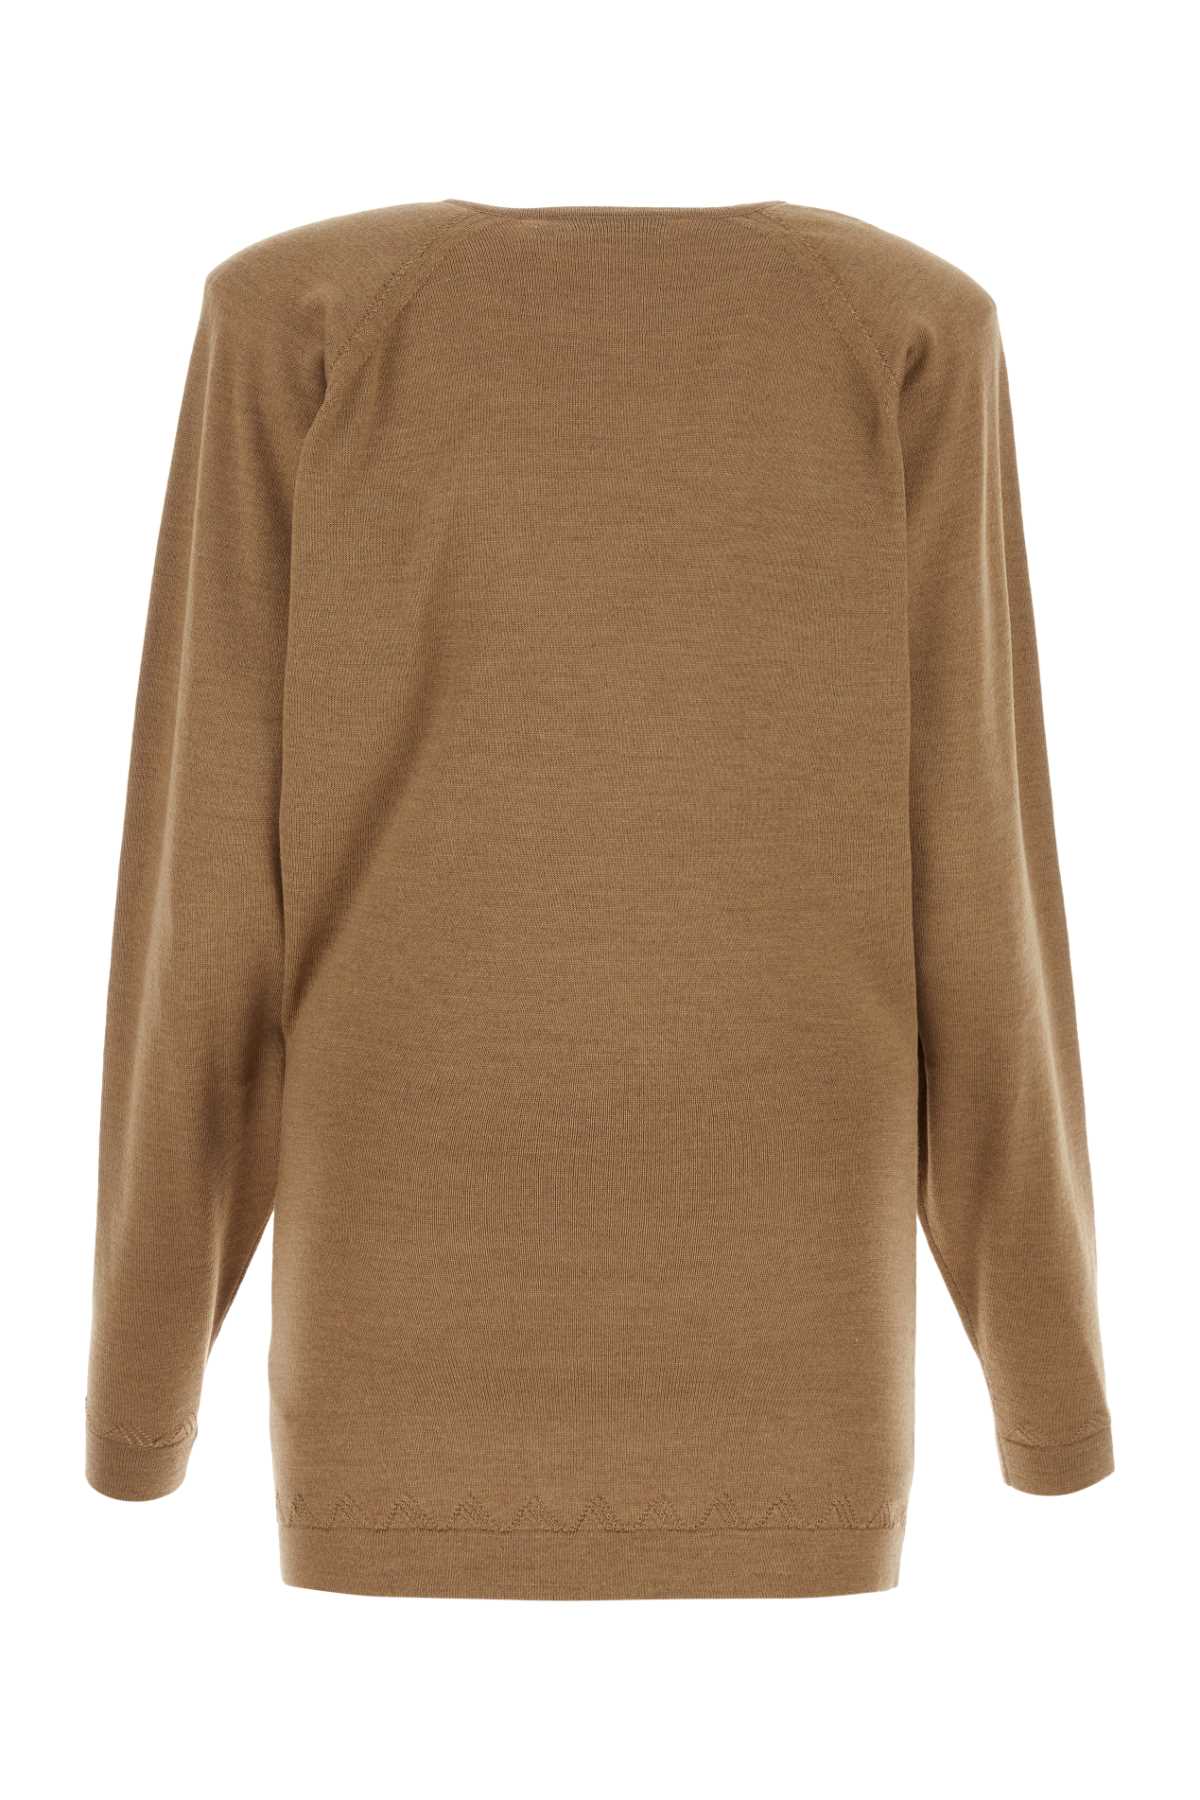 Shop Attico Camel Wool Bequiri Sweater